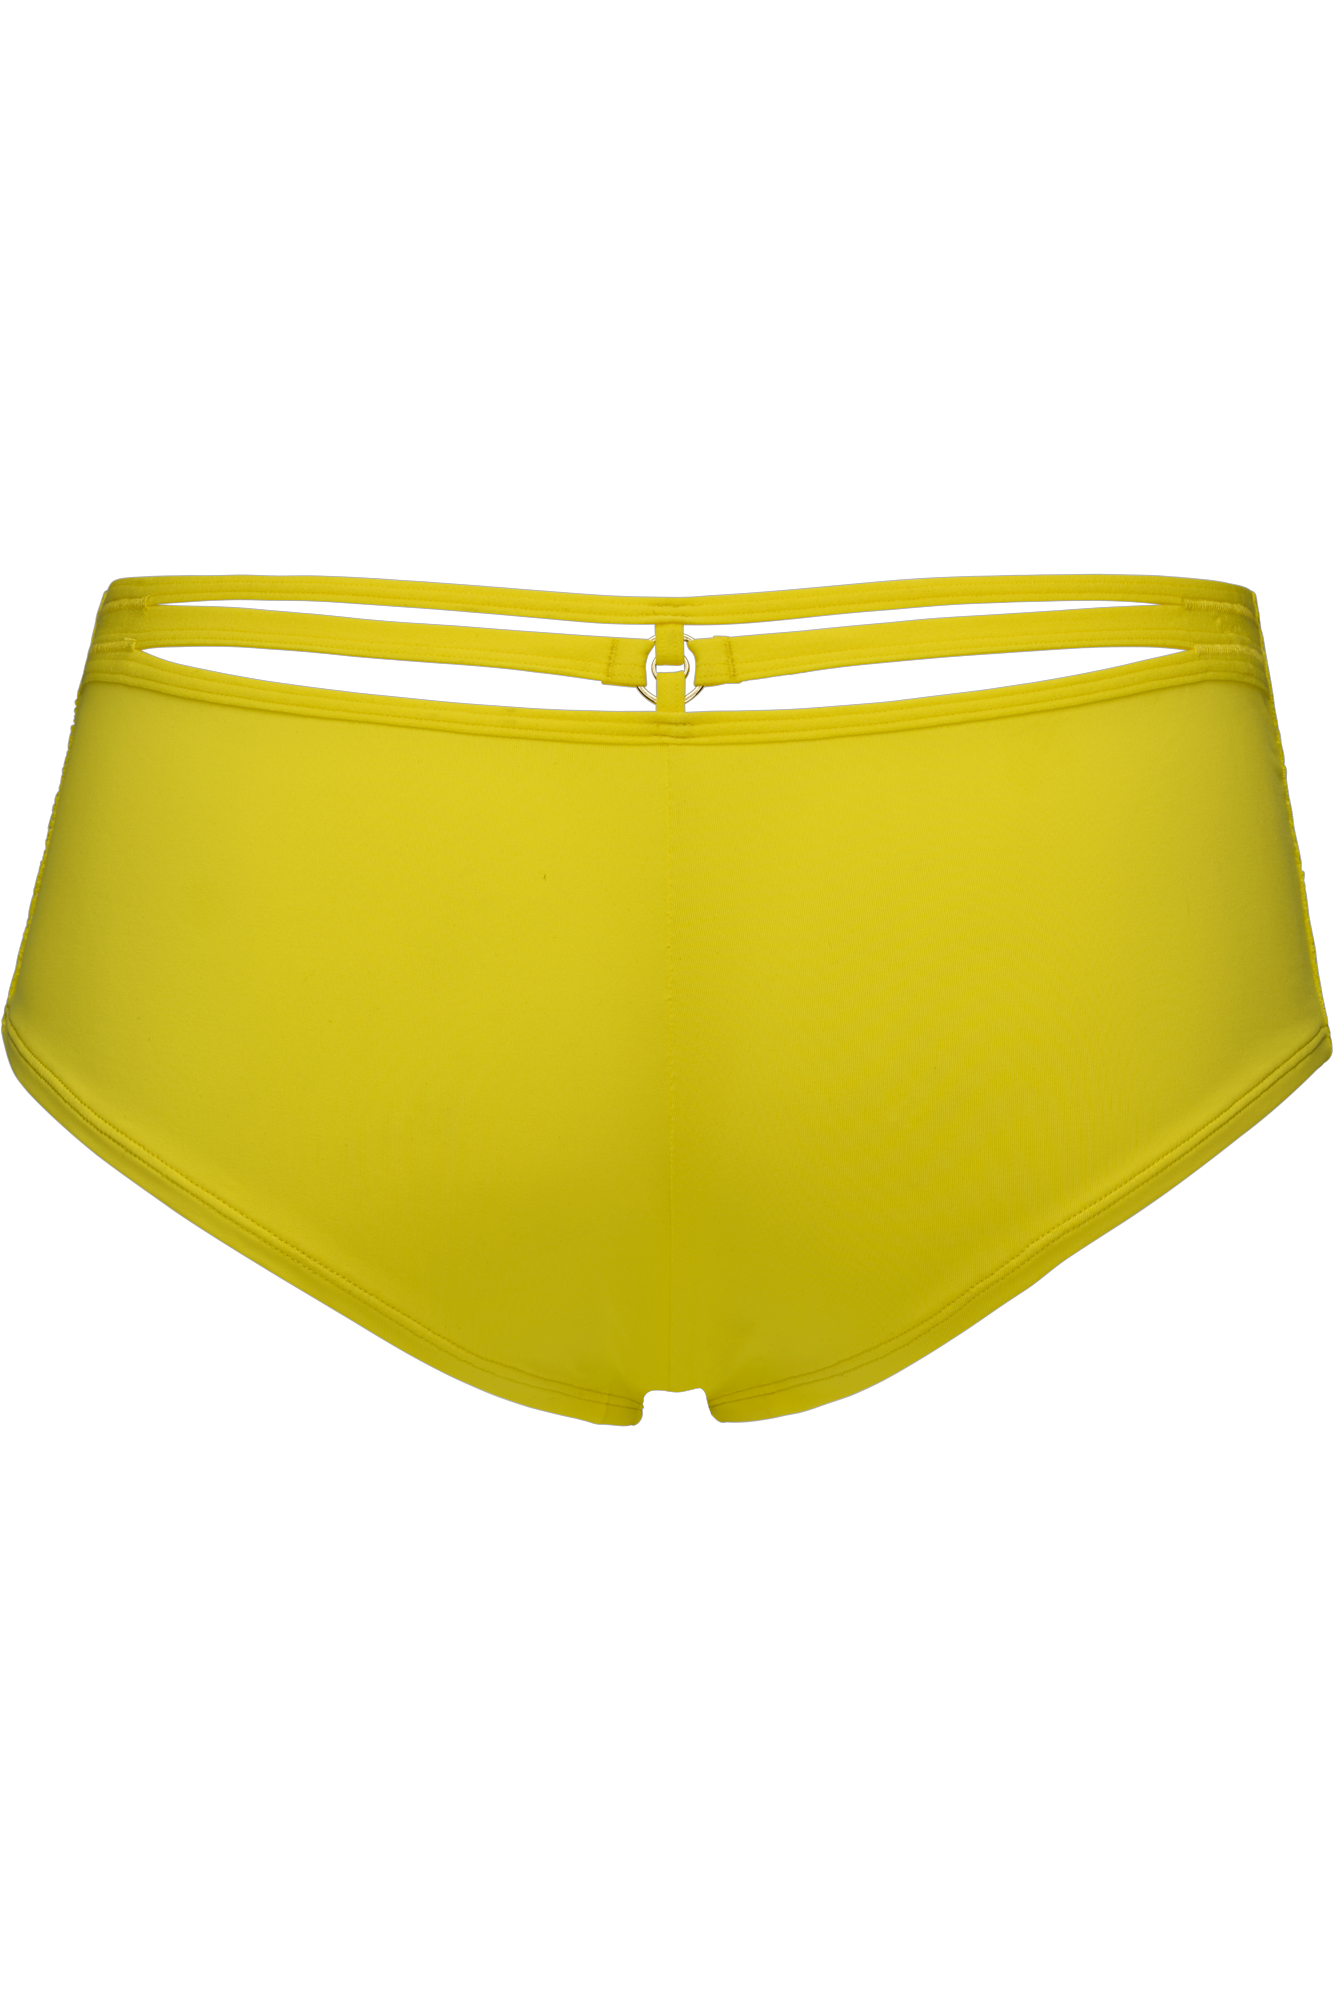 Marlies Dekkers space odyssey 12 cm brazilian shorts citrus yellow lace